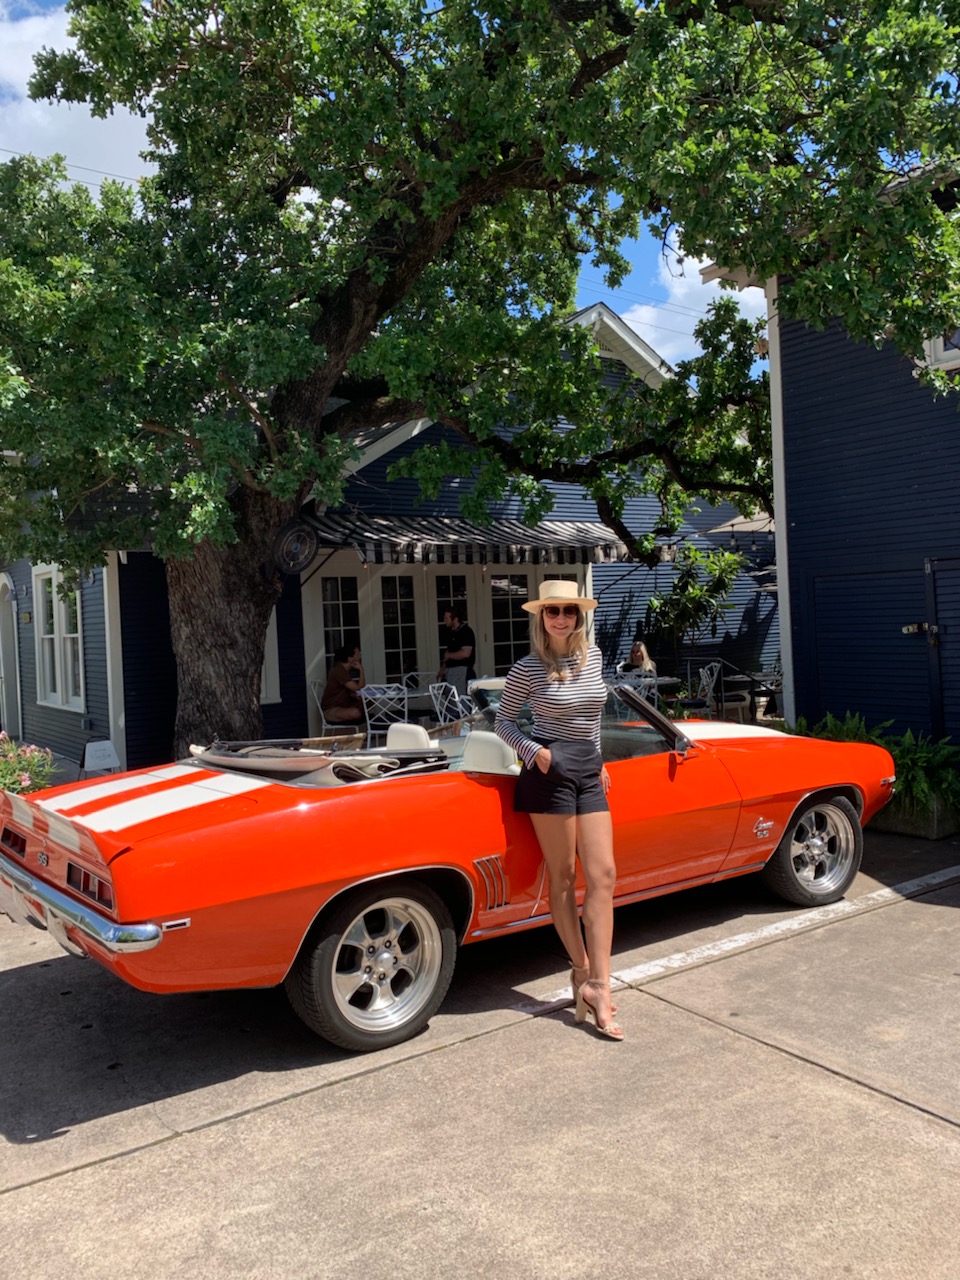 Woman standing beside an orange convertible car under a tree, showcasing her success as a top Austin Realtor.